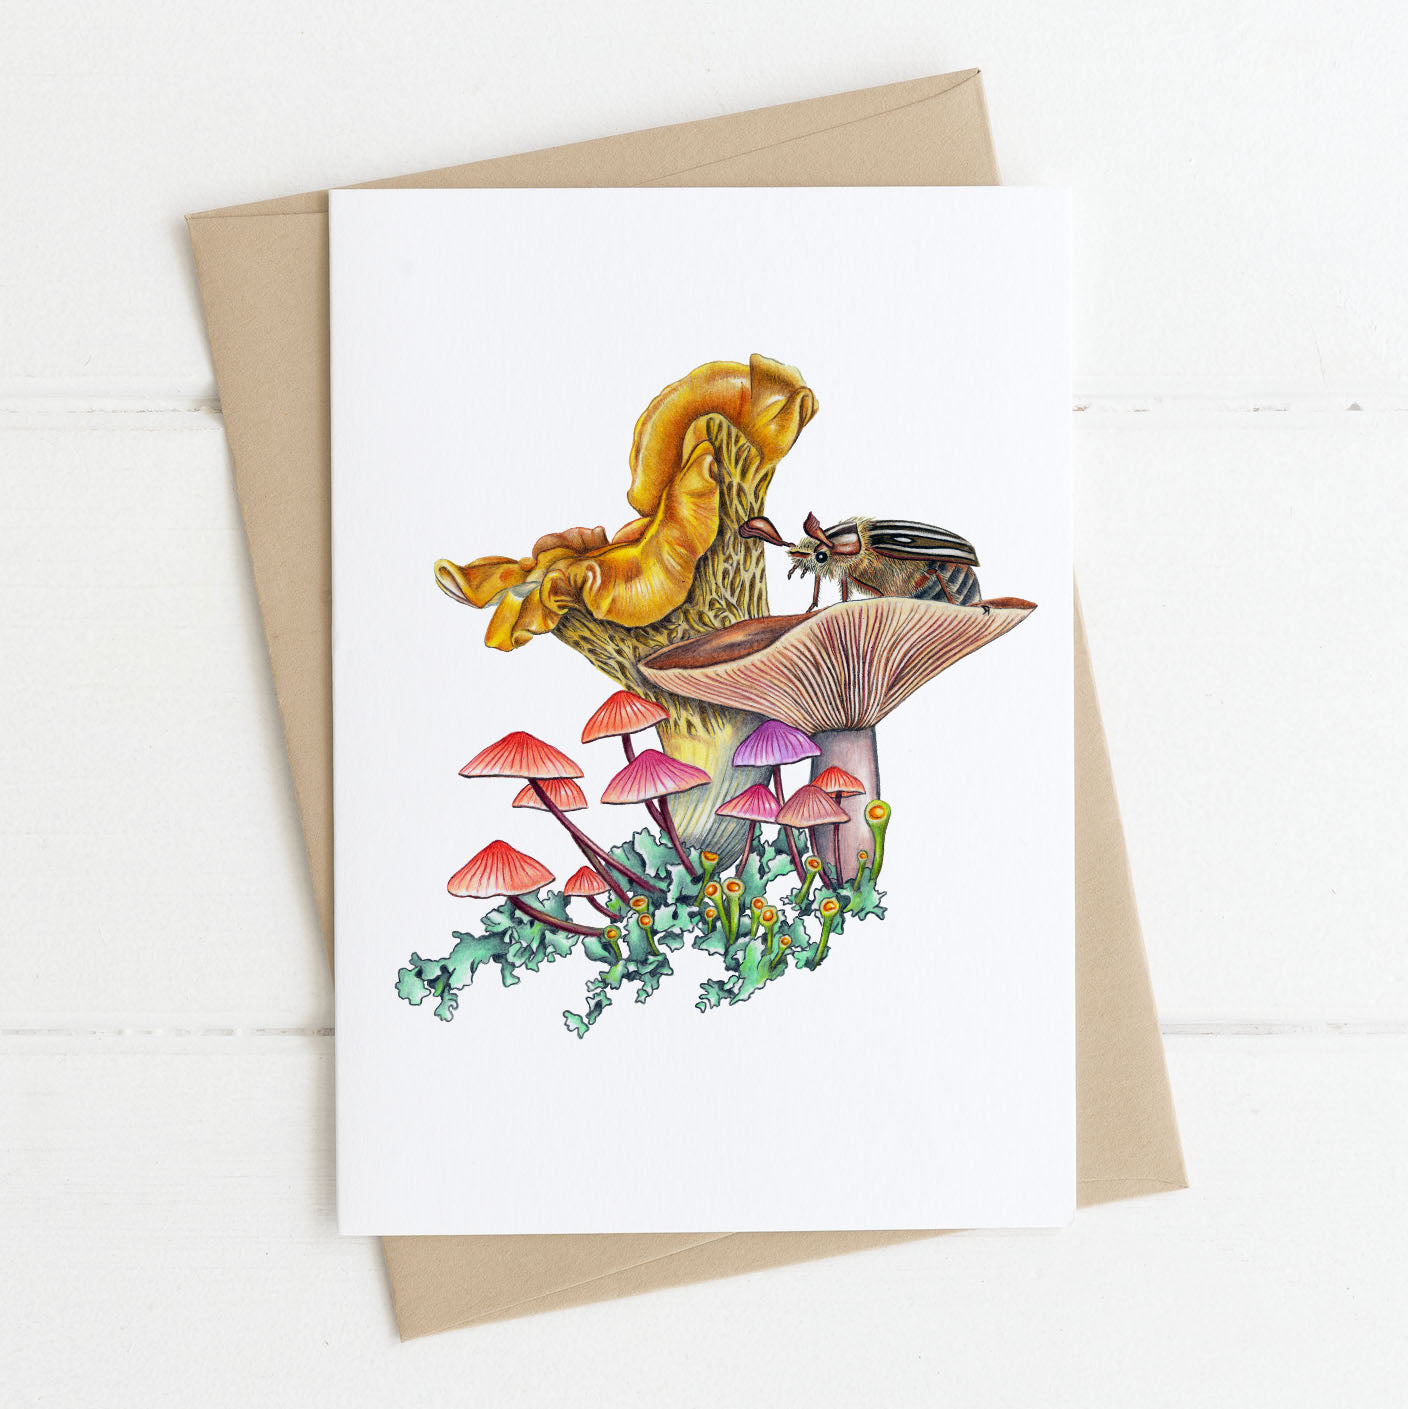 Greeting card blank inside printed with mushroom design by Rachel Diaz-Bastin Art, California native animal